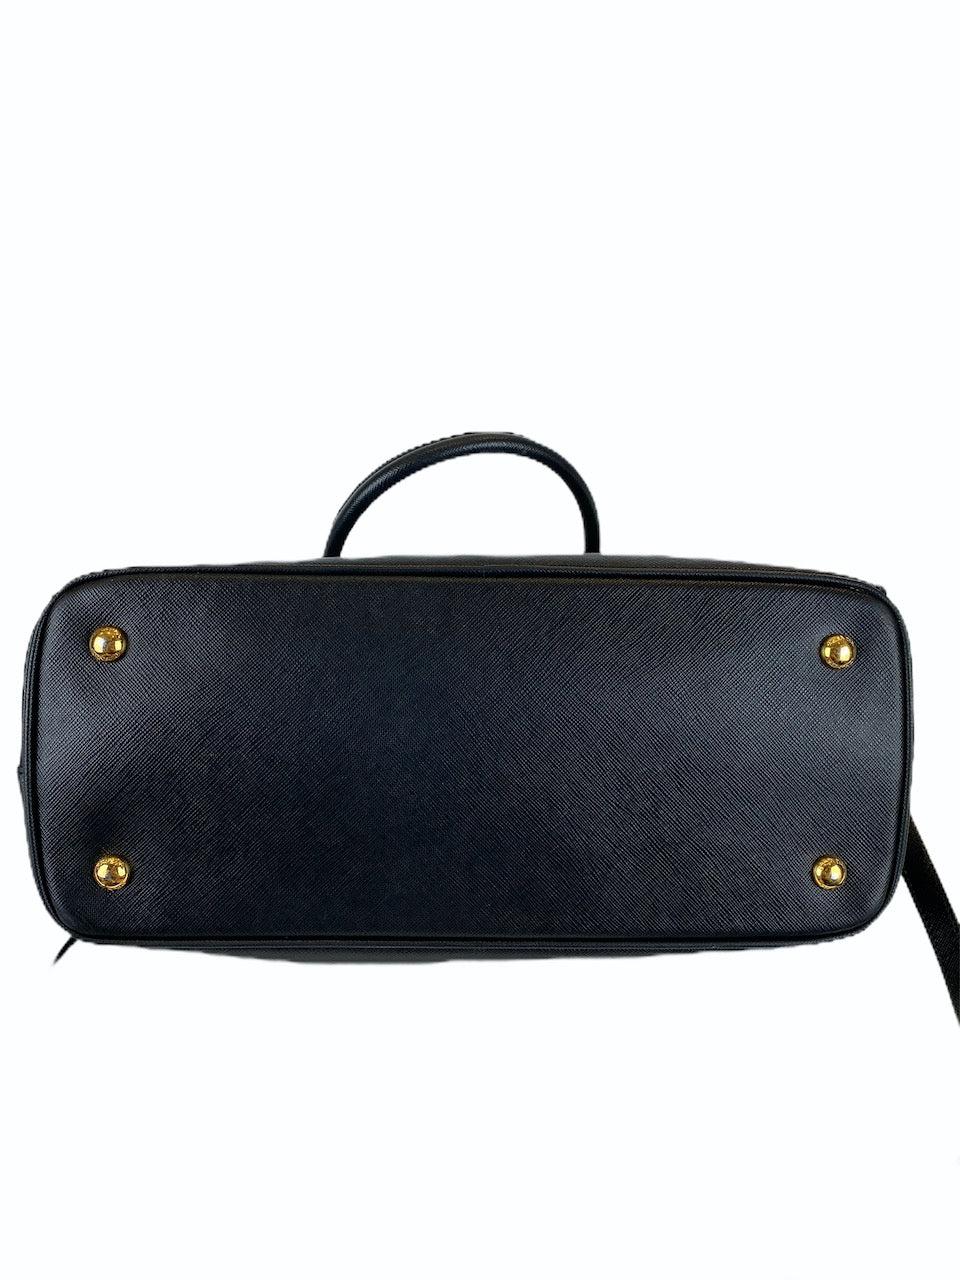 Prada Black Saffiano Leather Tote - As Seen on Instagram - Siopaella Designer Exchange